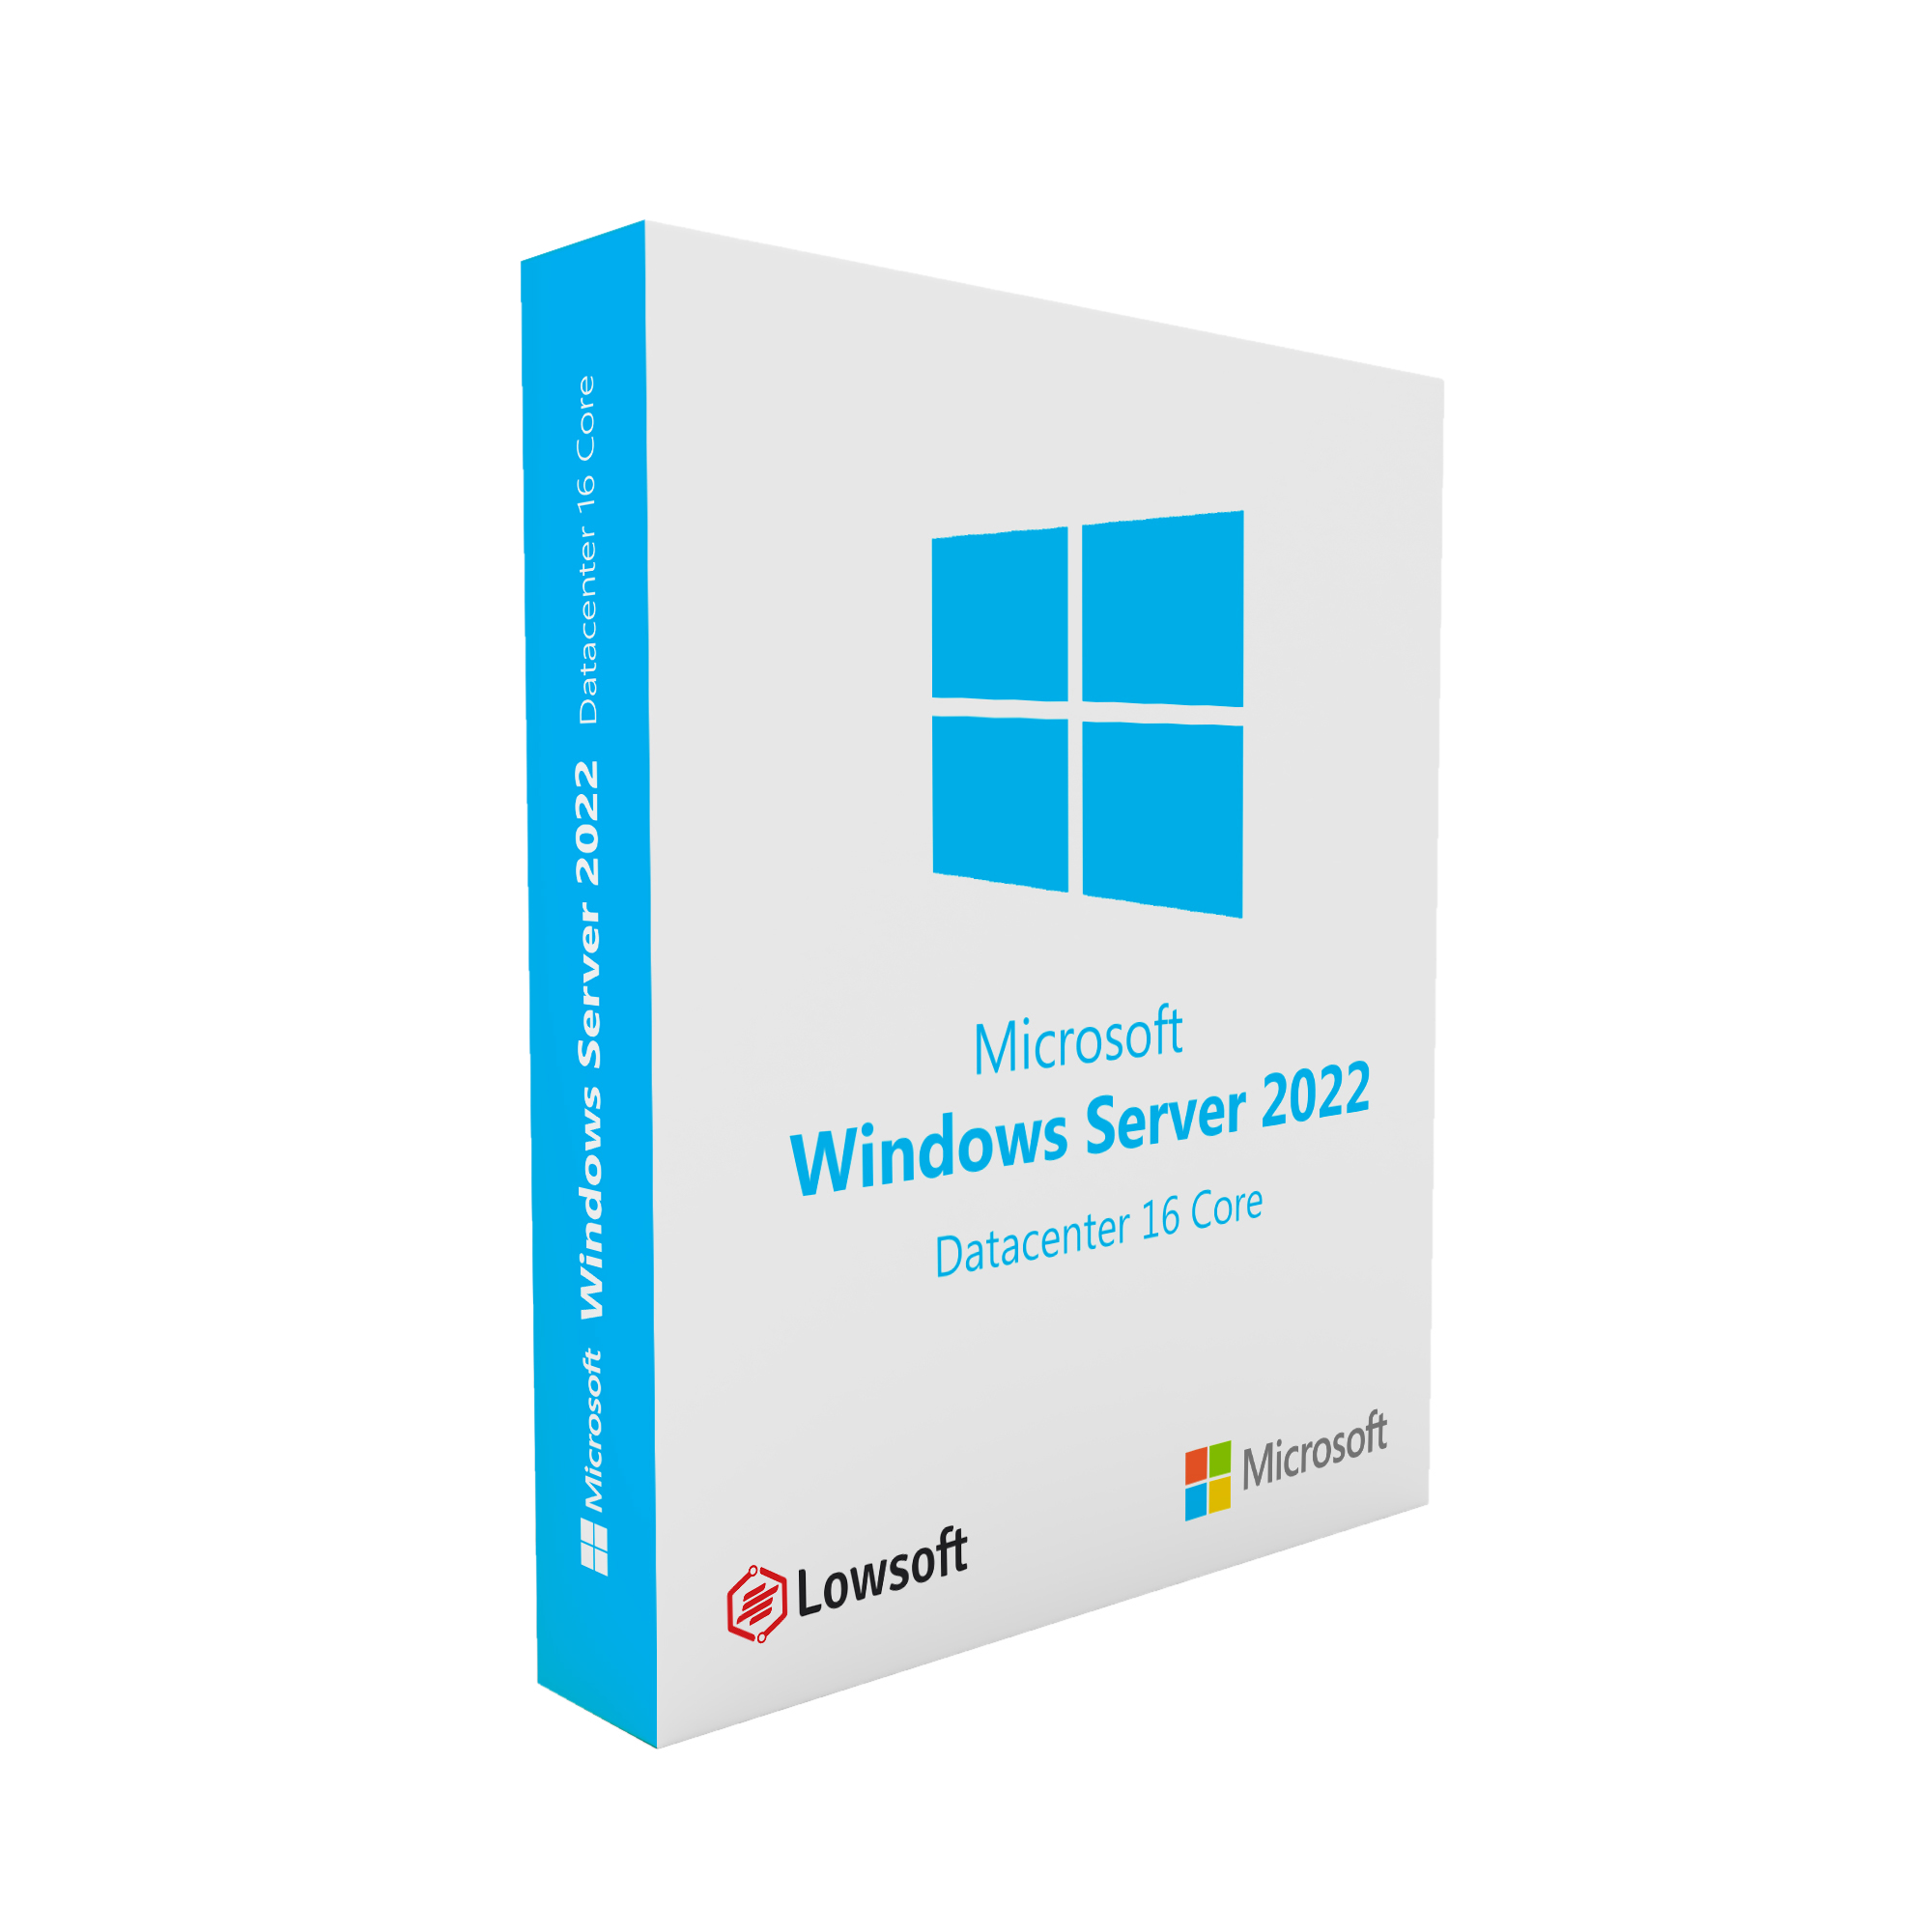 Windows Server 2022 Datacenter (16 Core)